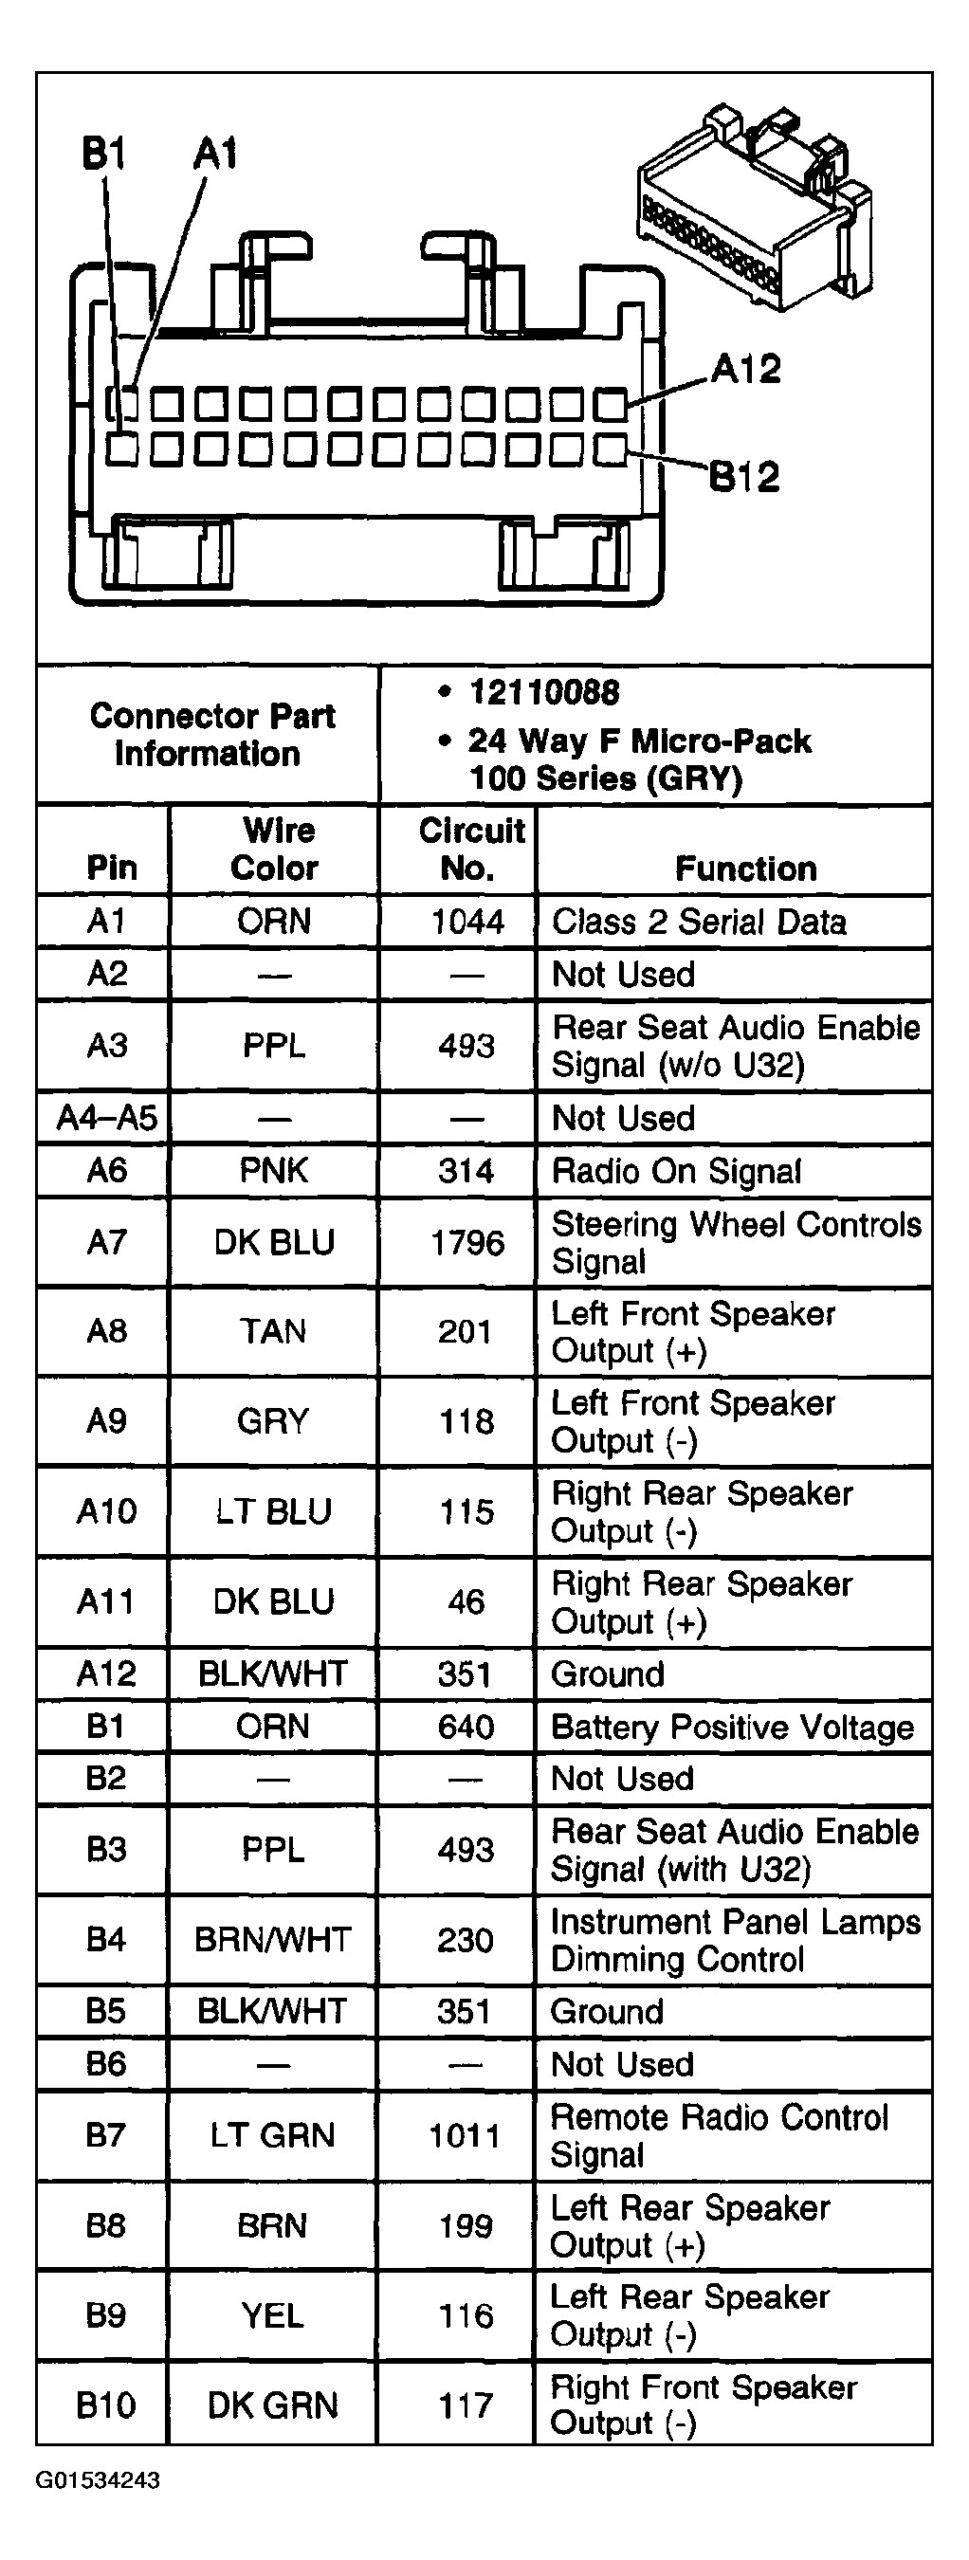 2002 Chevy Trailblazer Radio Wiring Diagram Cadician s Blog